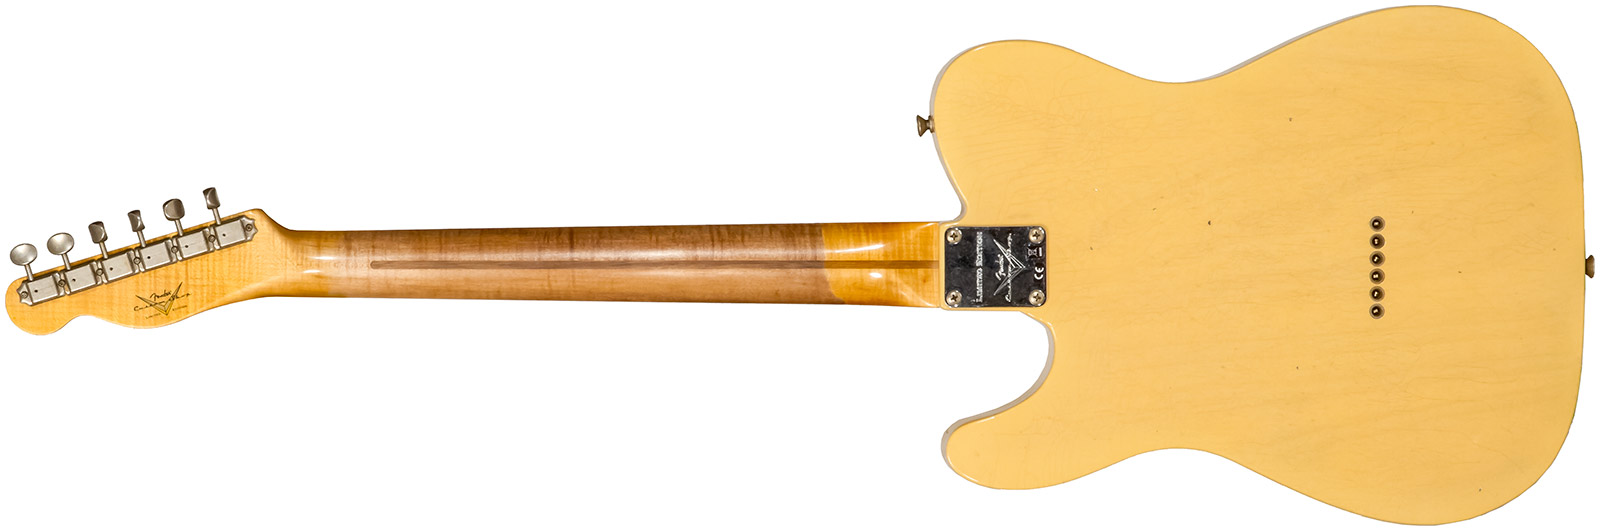 Fender Custom Shop Tele 1953 2s Ht Mn #r126793 - Journeyman Relic Aged Nocaster Blonde - E-Gitarre in Teleform - Variation 1